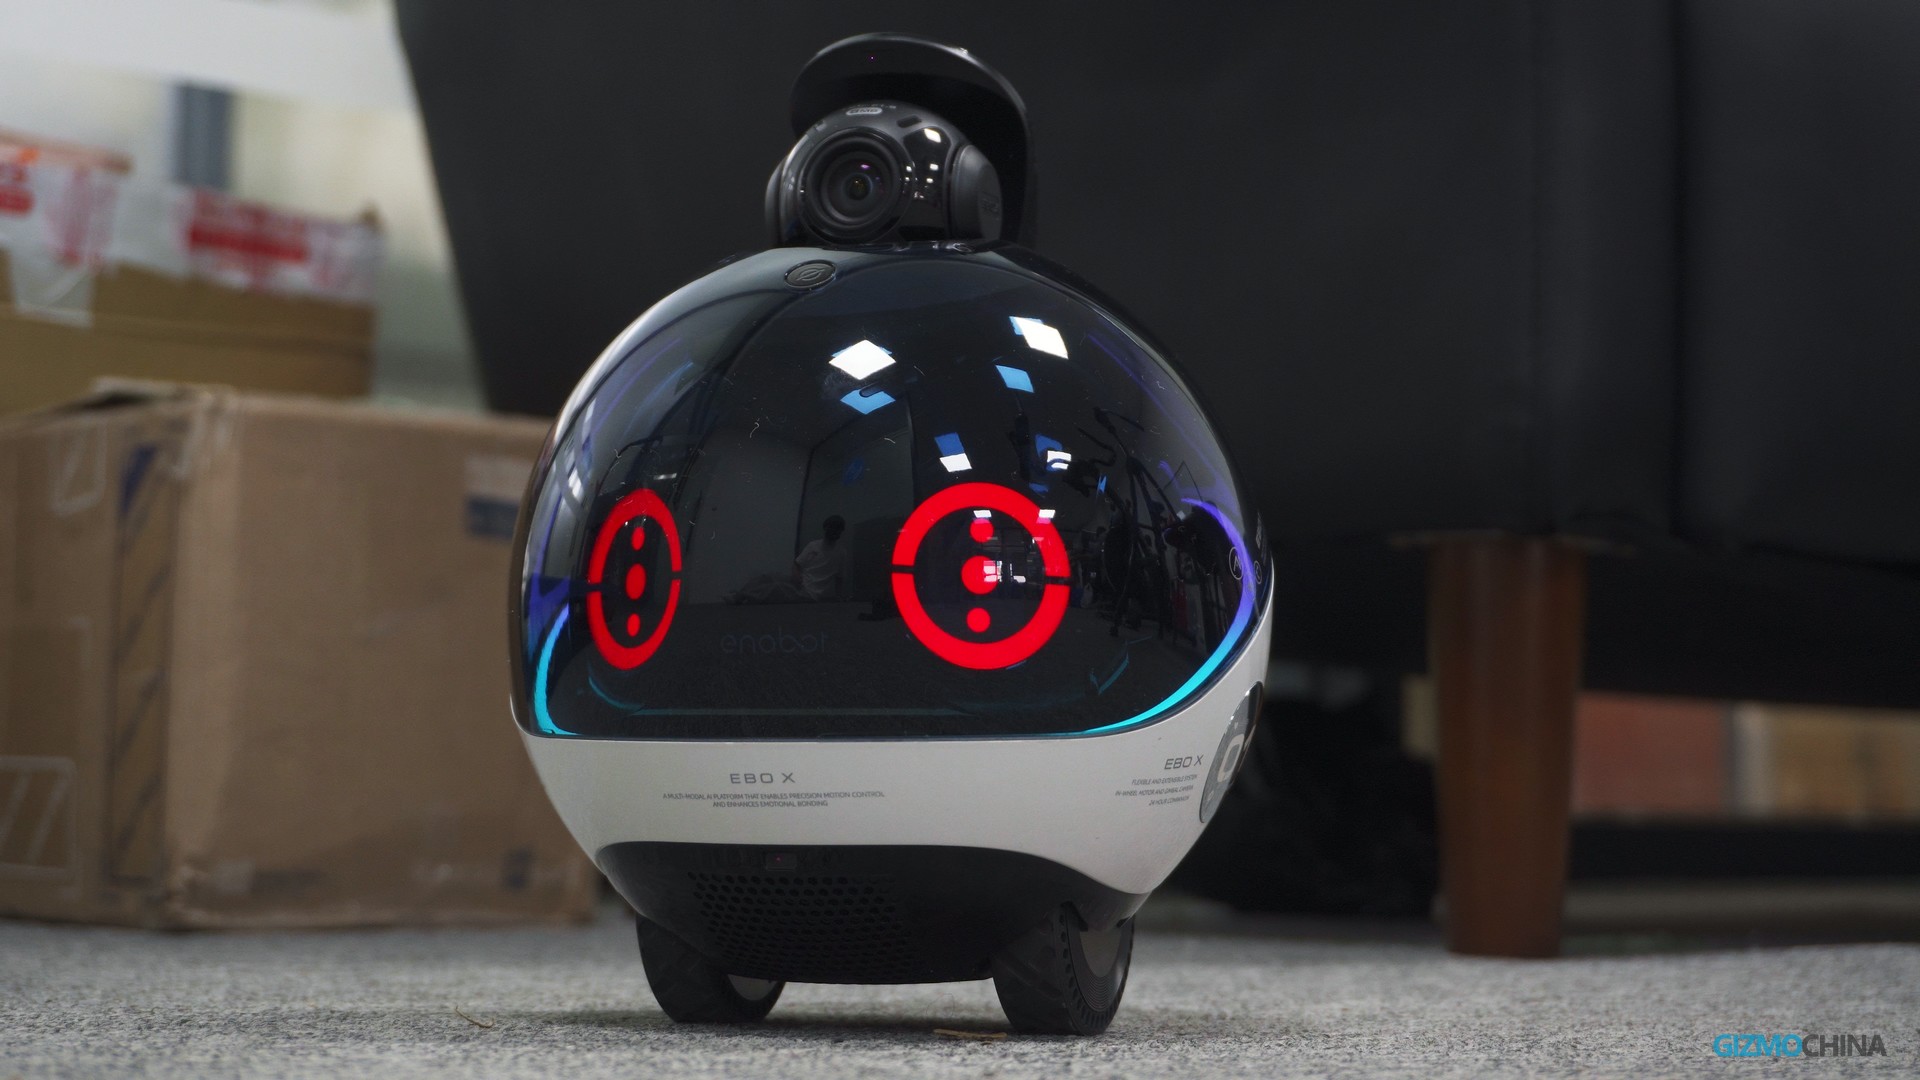 Enabot EBO X home robot Kickstarter attains nearly 20 times its goal -   News